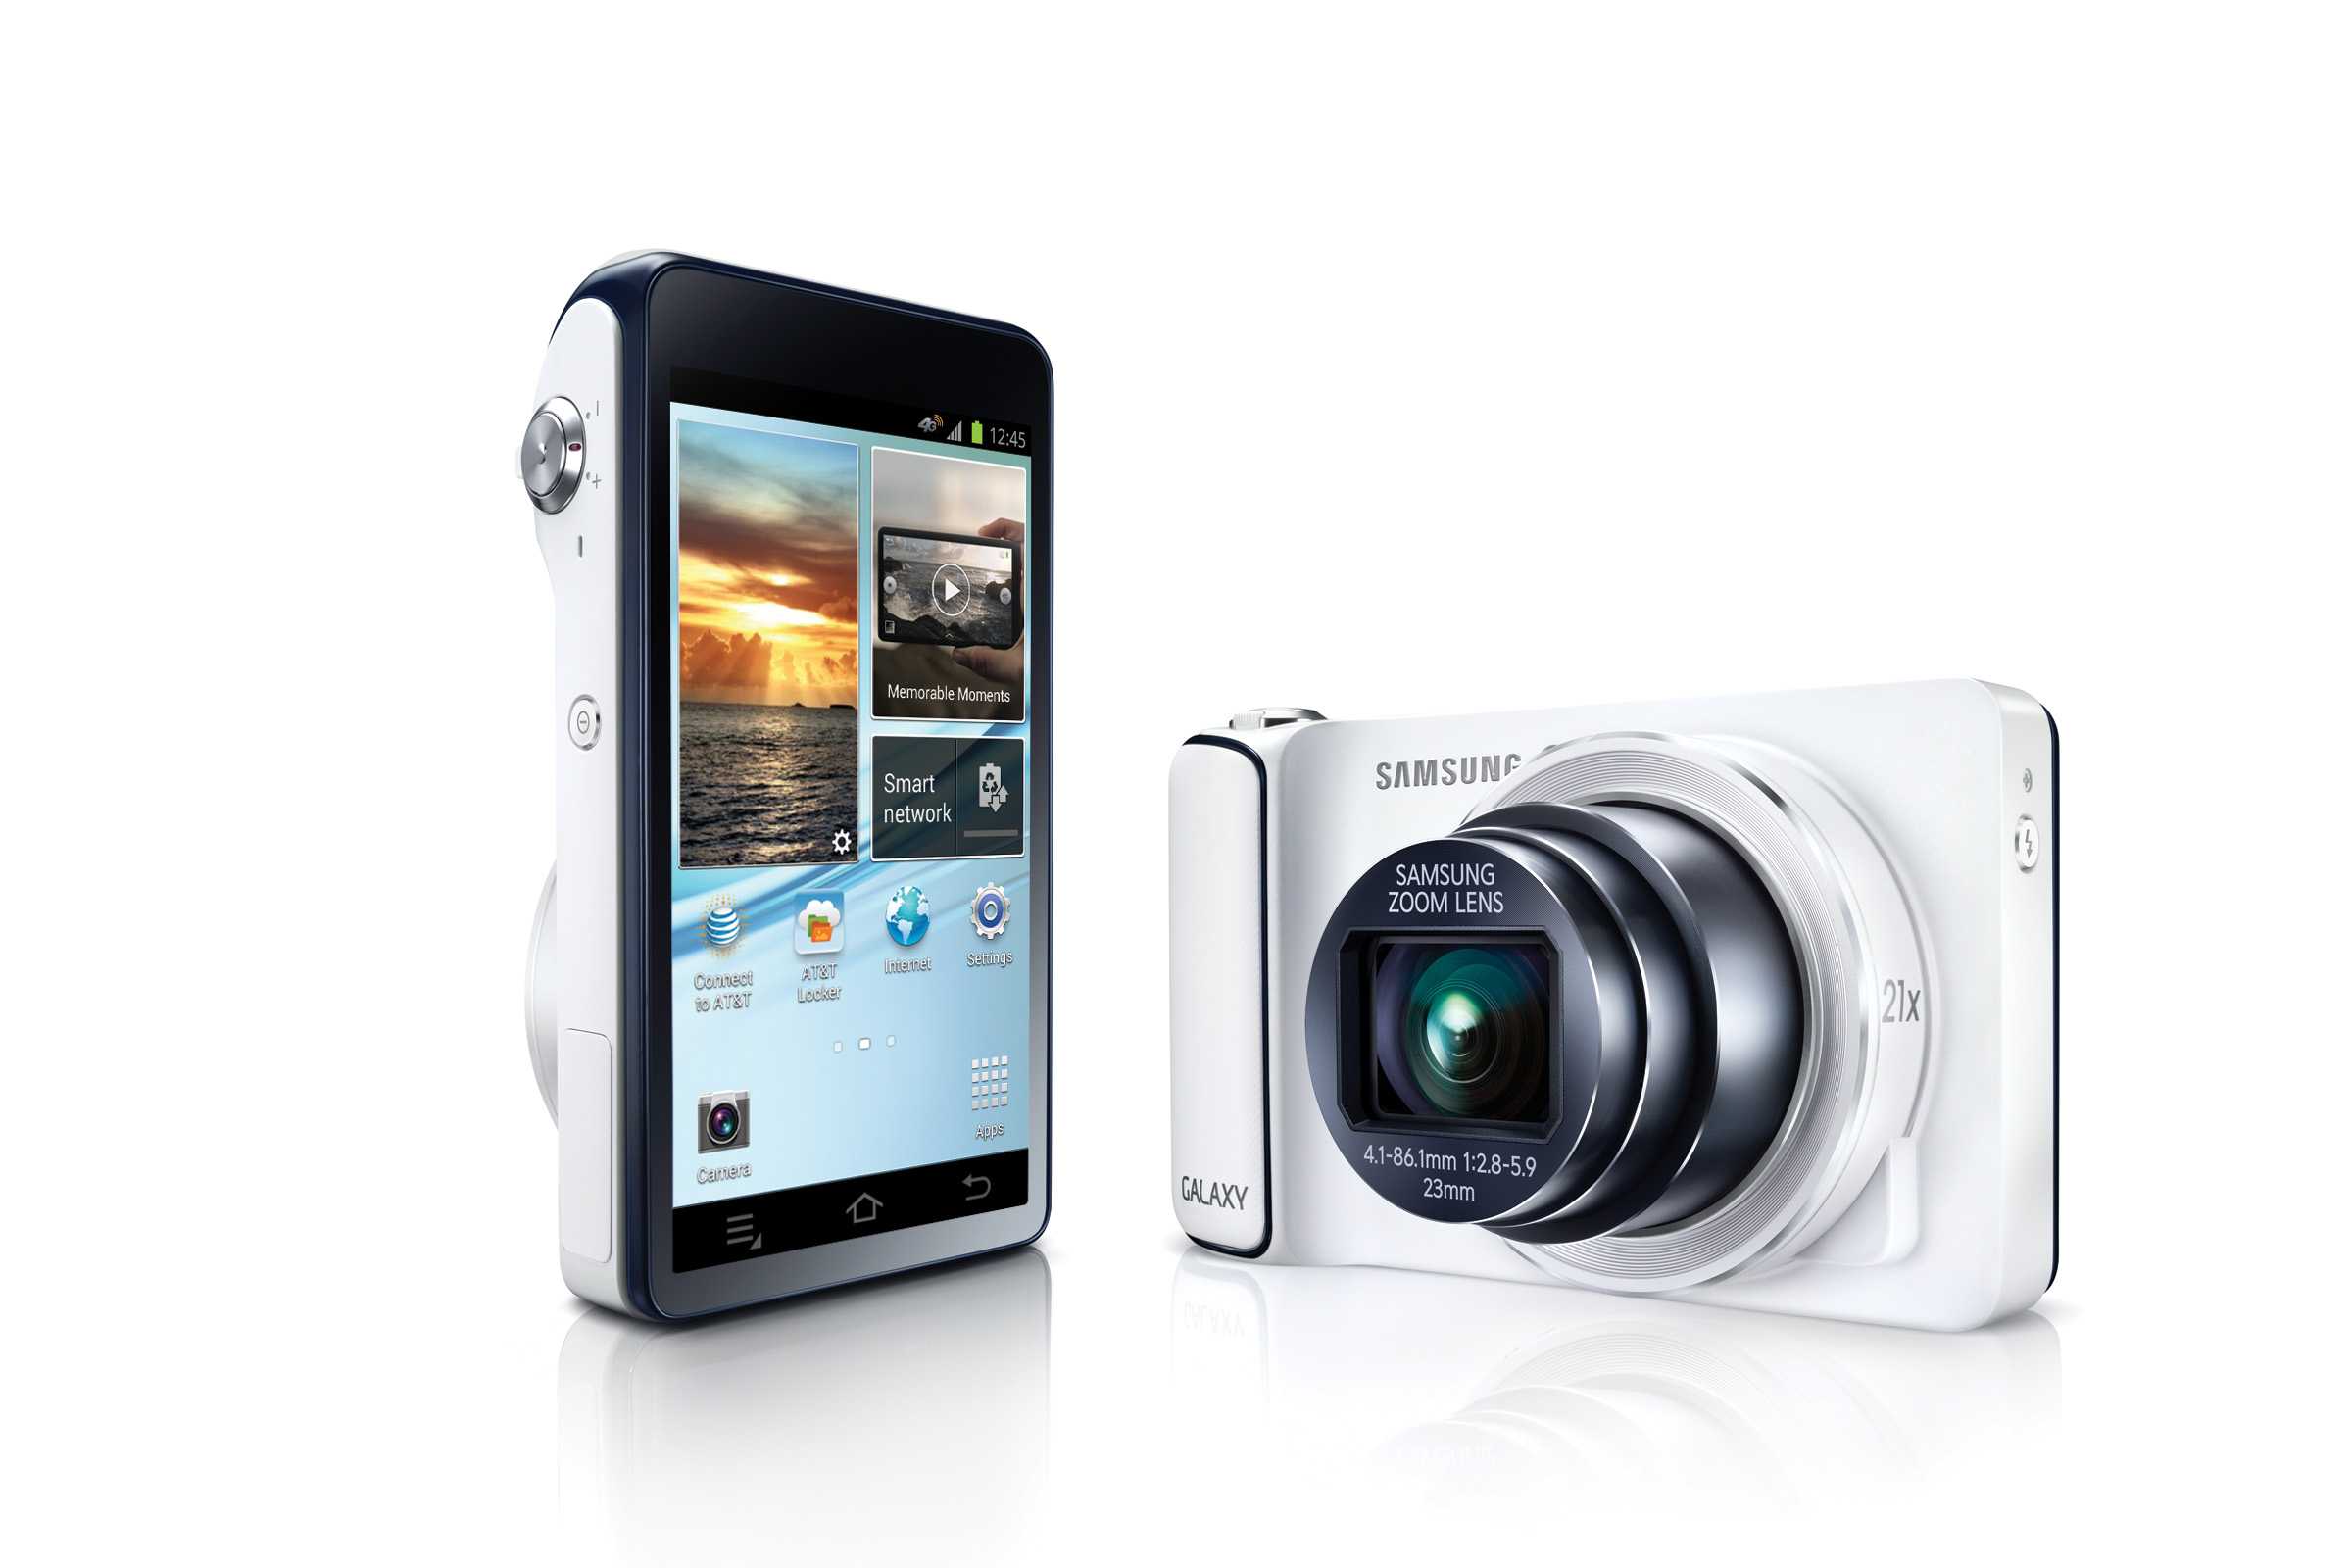 Samsung Galaxy Digital Camera Pictures